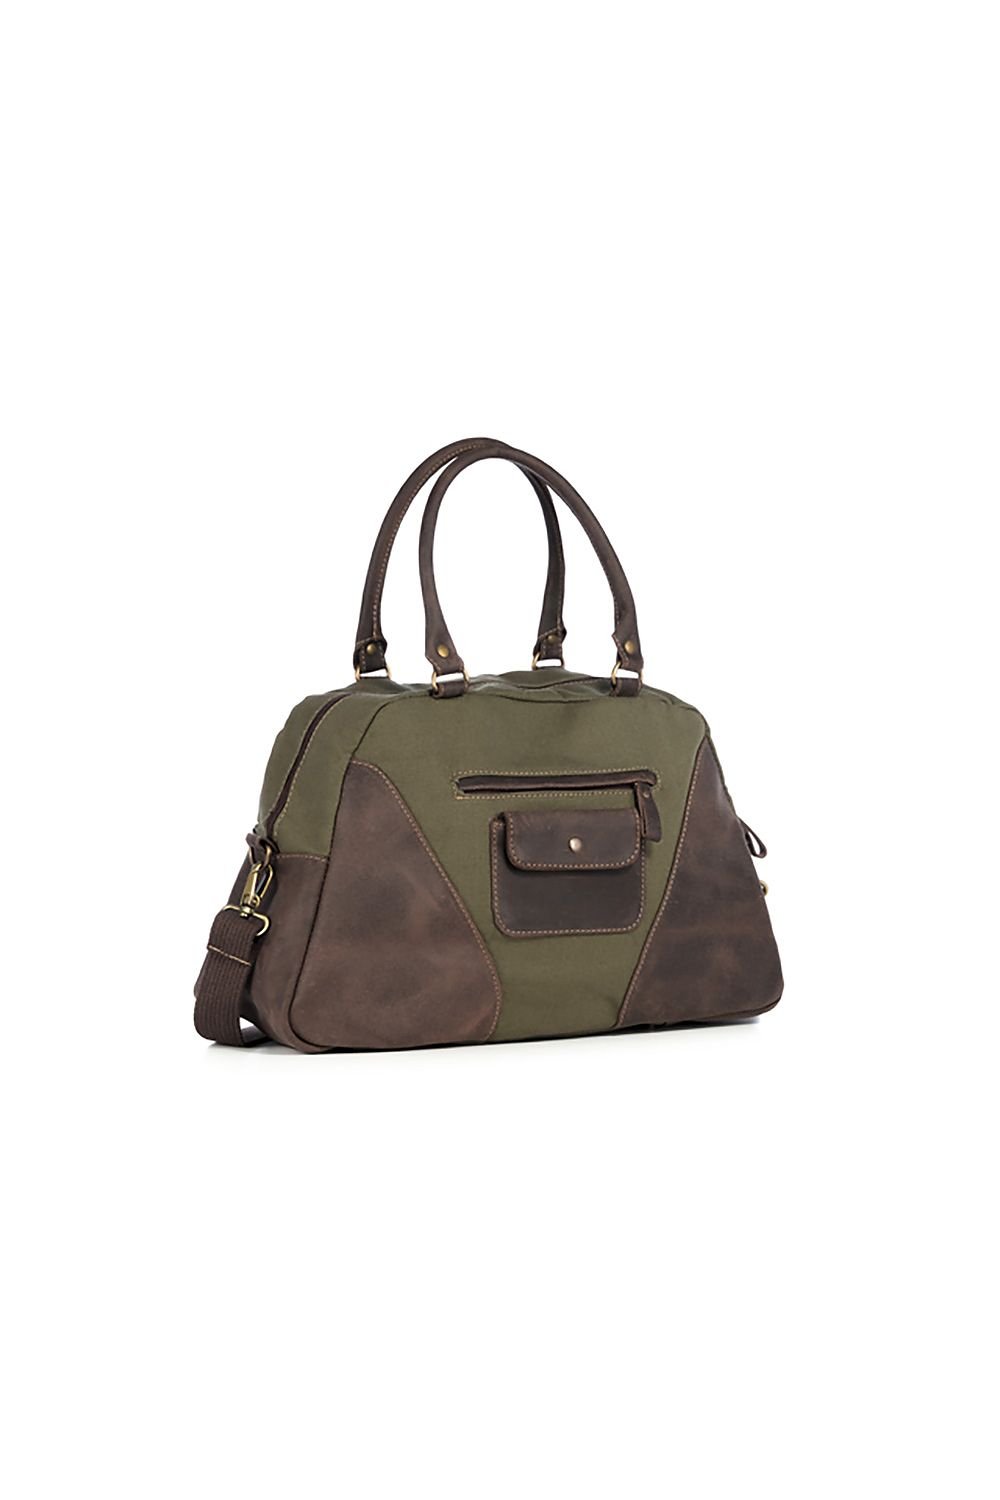 Verosoft Everyday Tiara Canvas Handbag - Vintage-Inspired Design with Ample Storage